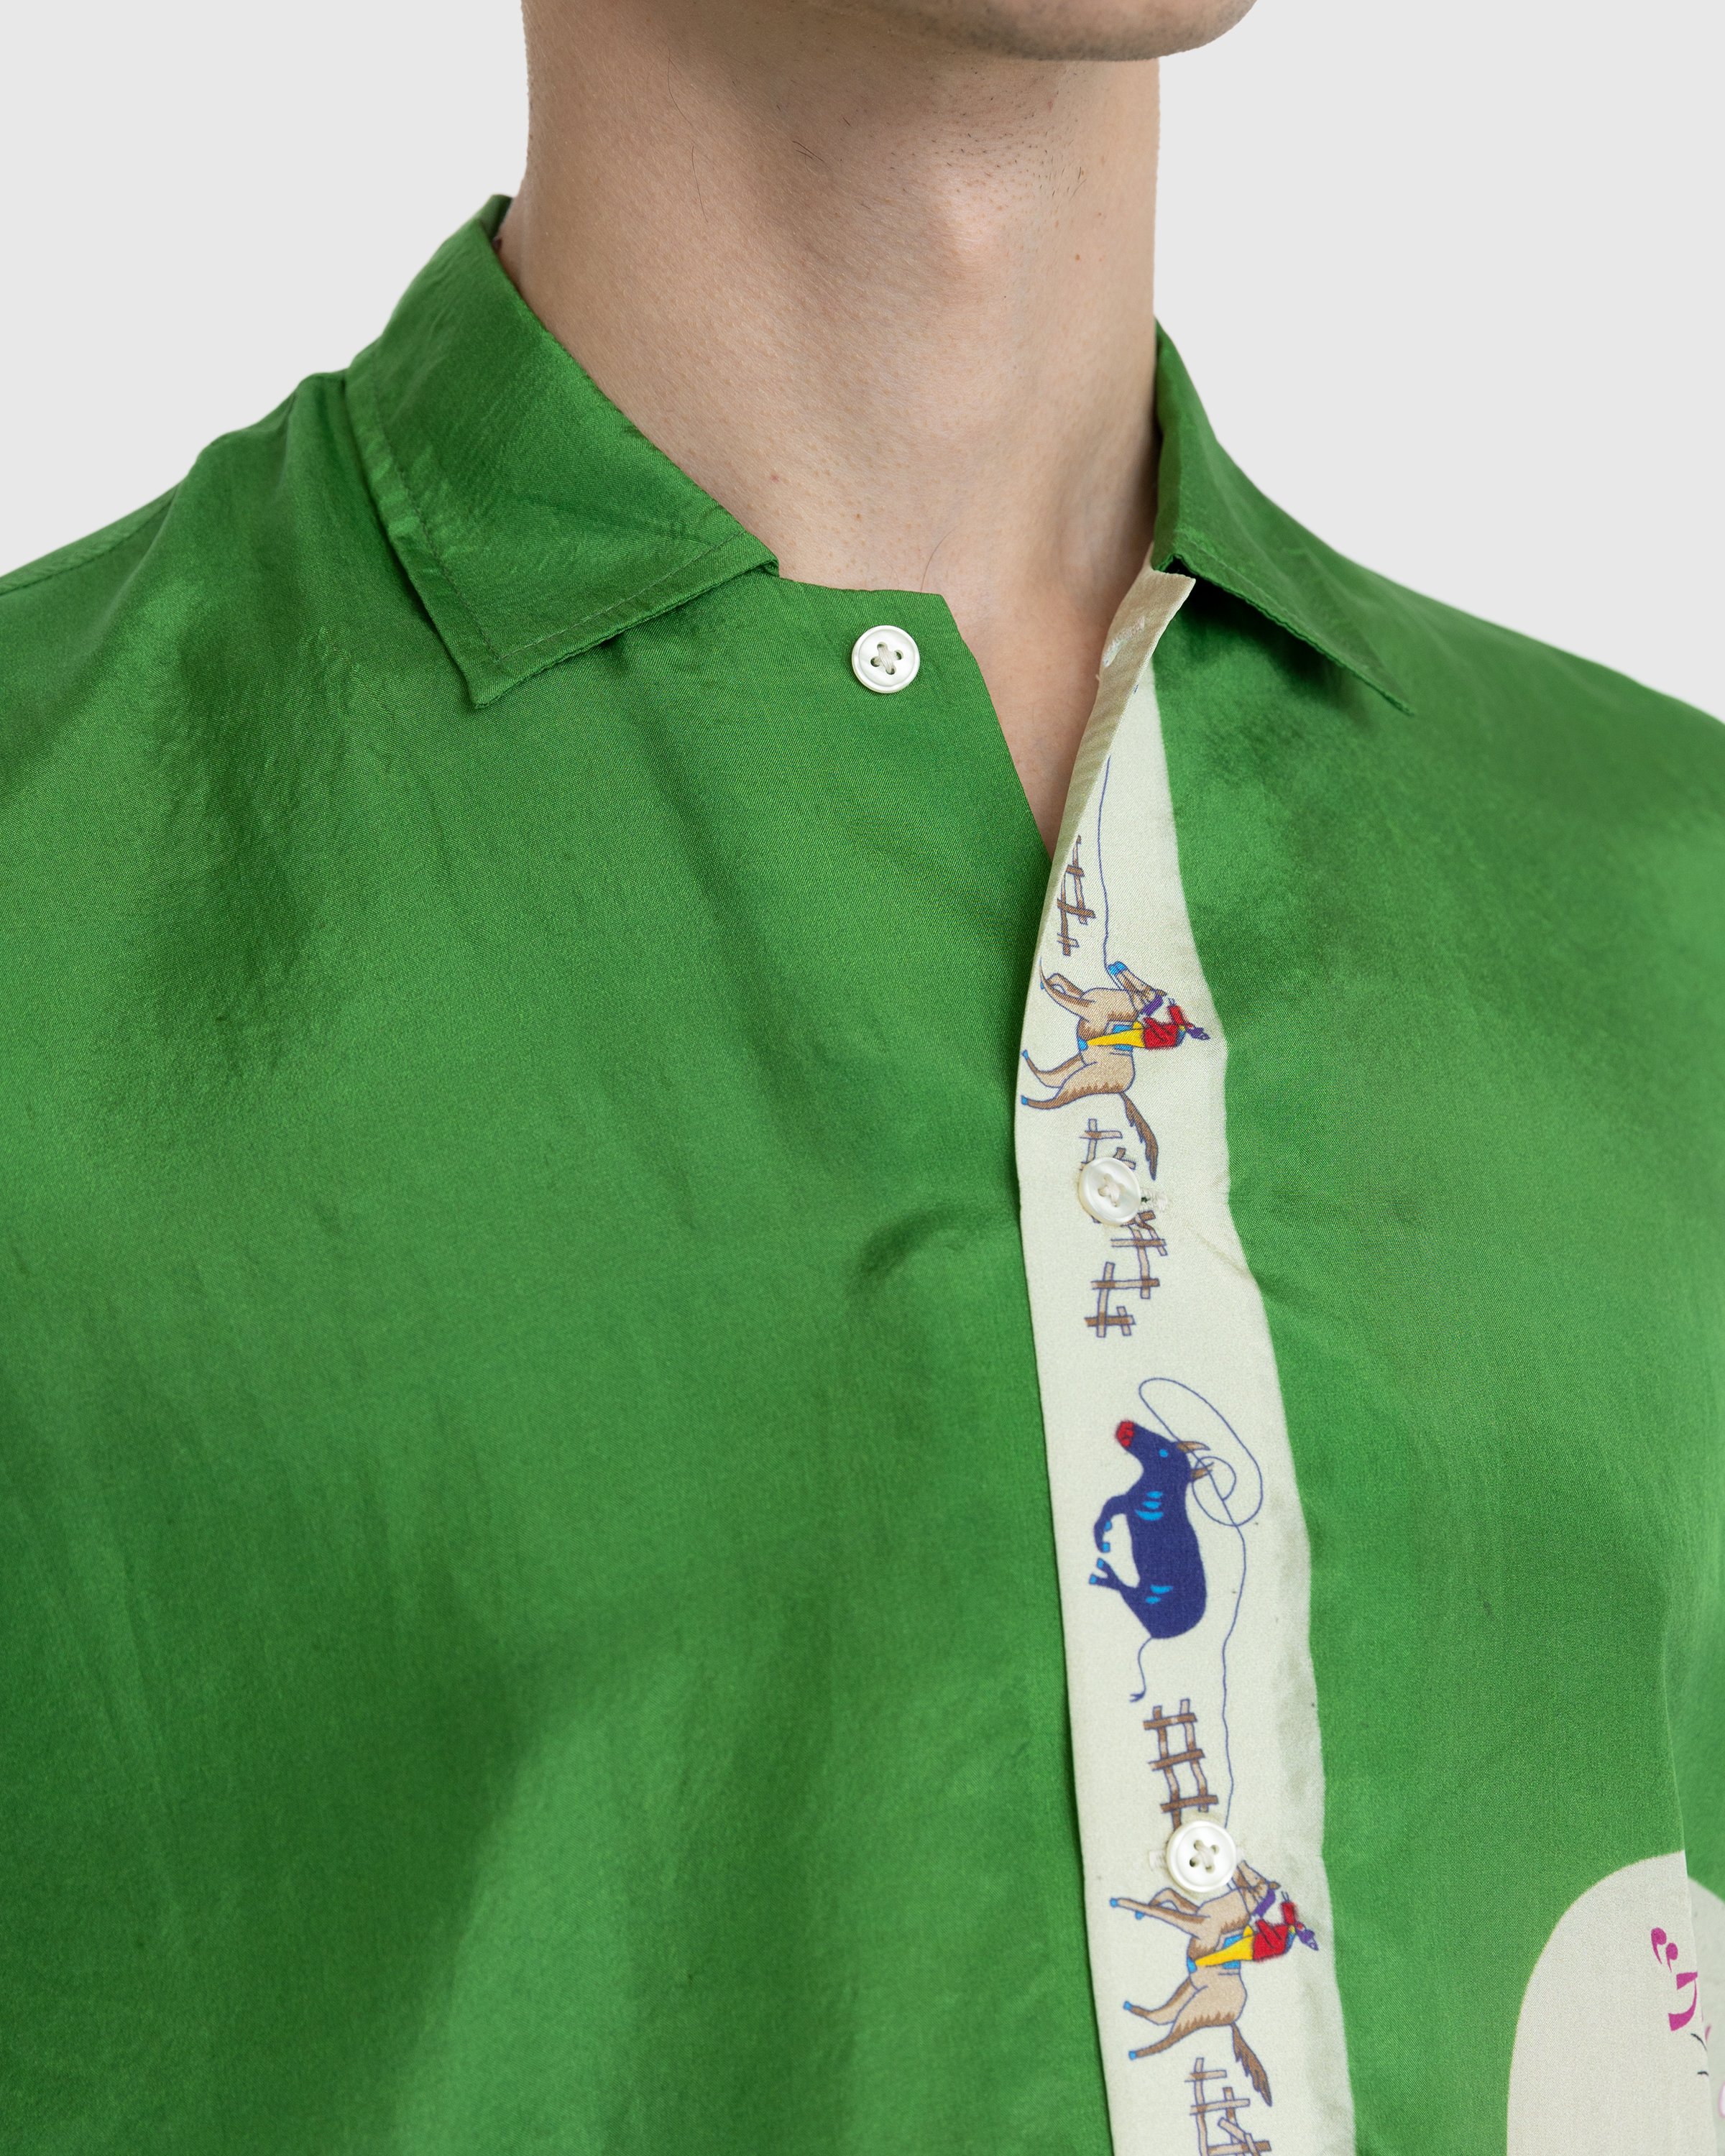 Bode - Round Up Short-Sleeve Shirt Green - Clothing - Green - Image 7